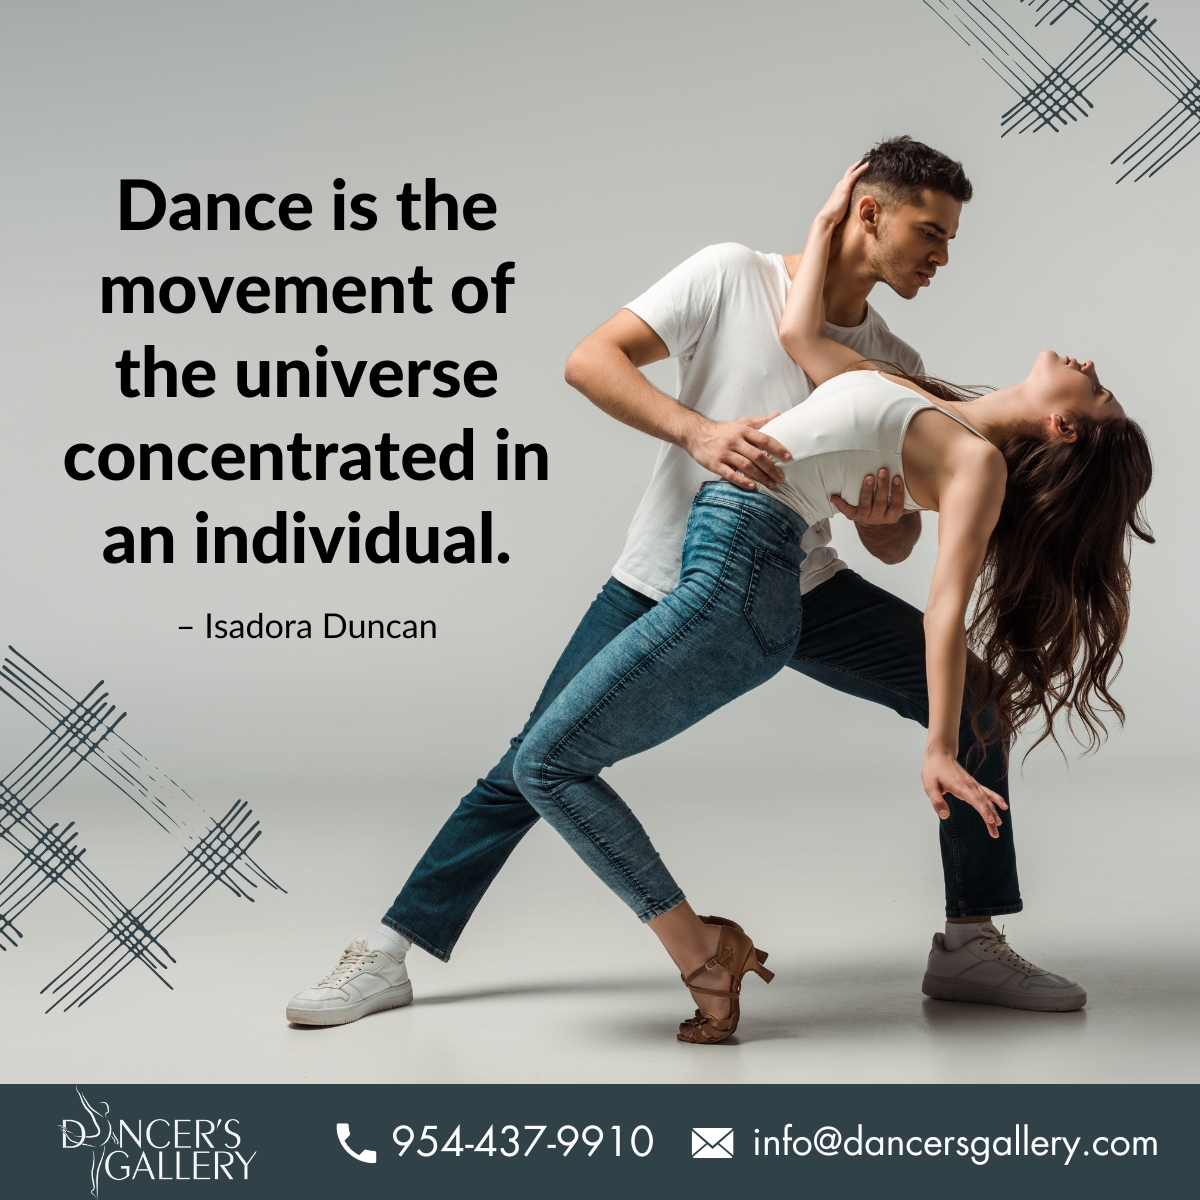 “Dance is the movement of the universe concentrated in an individual.” – Isadora Duncan

#quoteoftheday #dancestudiomiami #danceclasses #dancelover #dancelove #dancegoals #dancelife #lovefordance #miamidanceclasses #coopercitydancestudio #dancestudiocoopercity #davieflorida